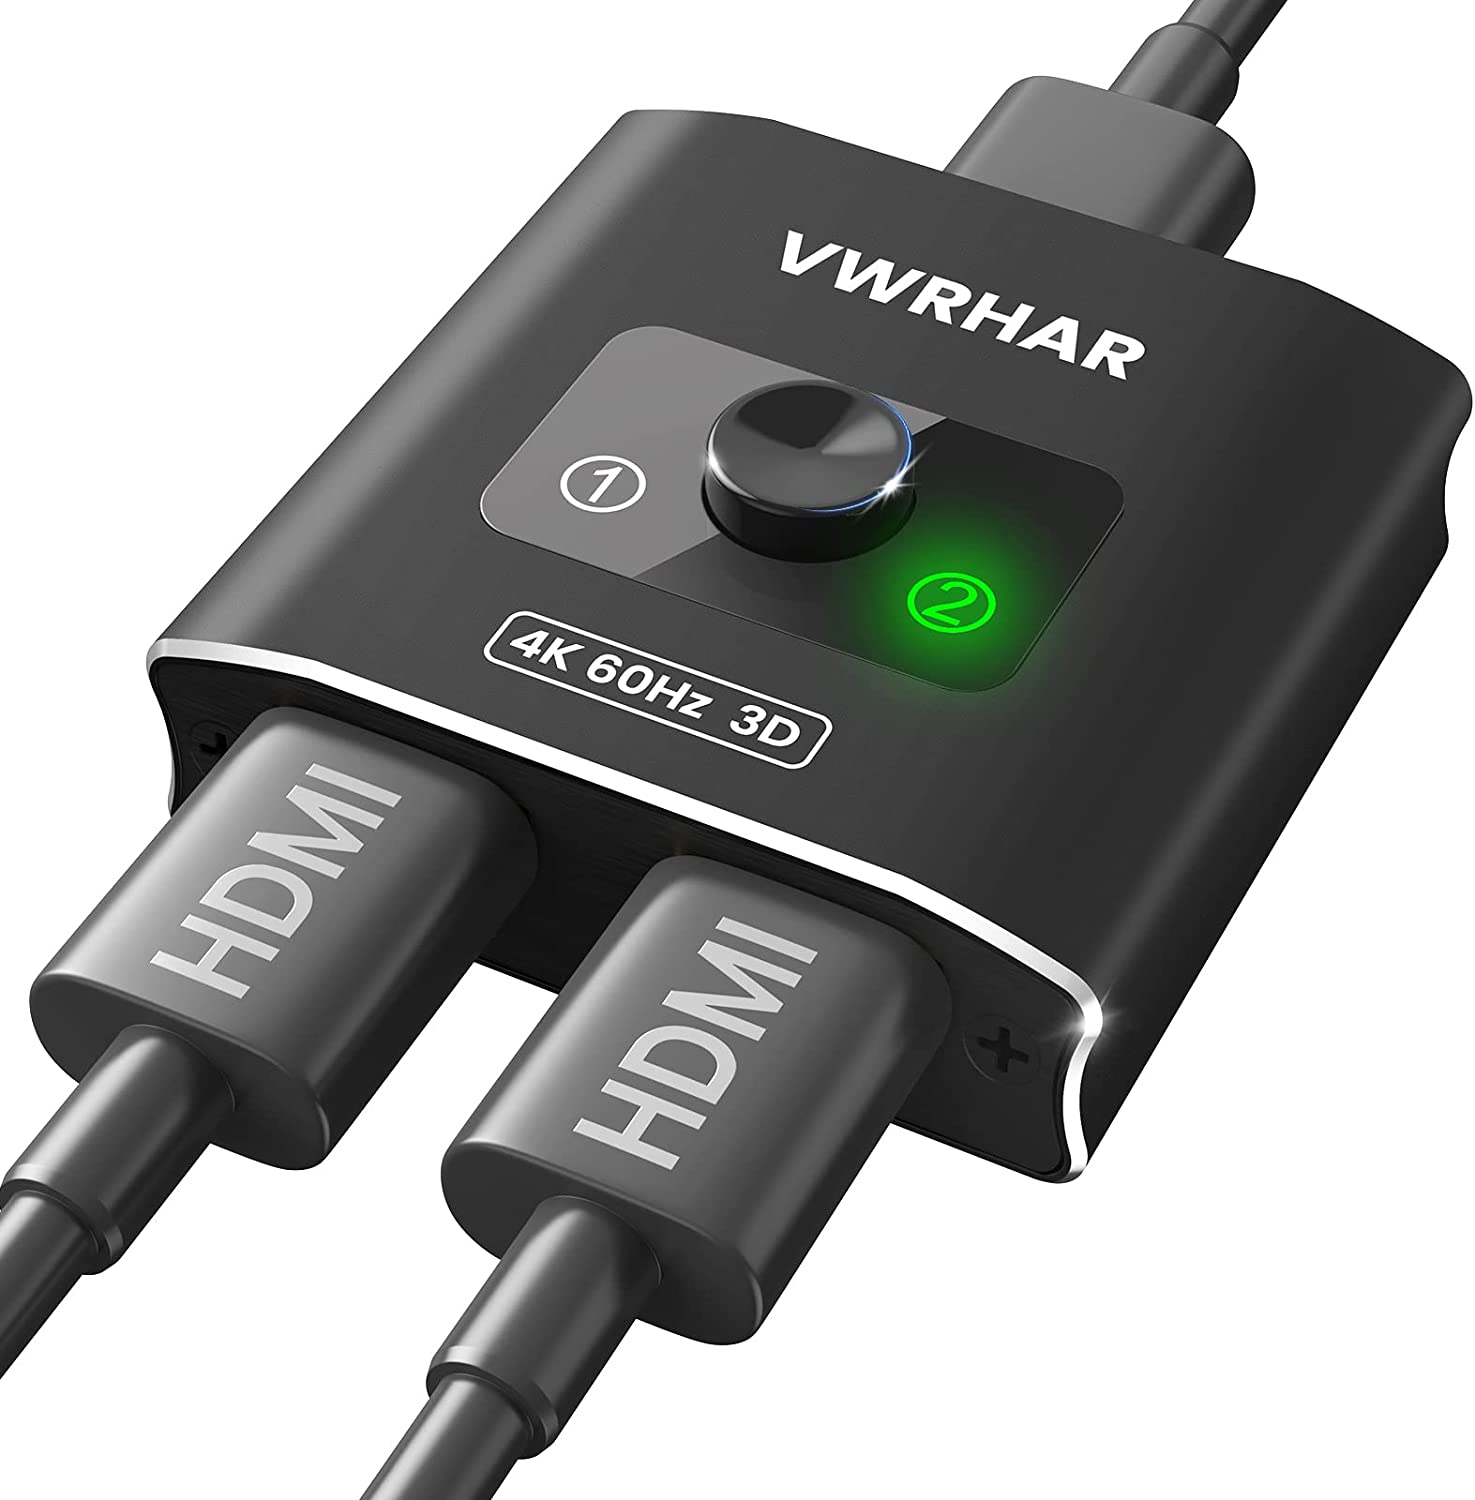 VWRHar Plug & Play Stable HDMI 2-Port